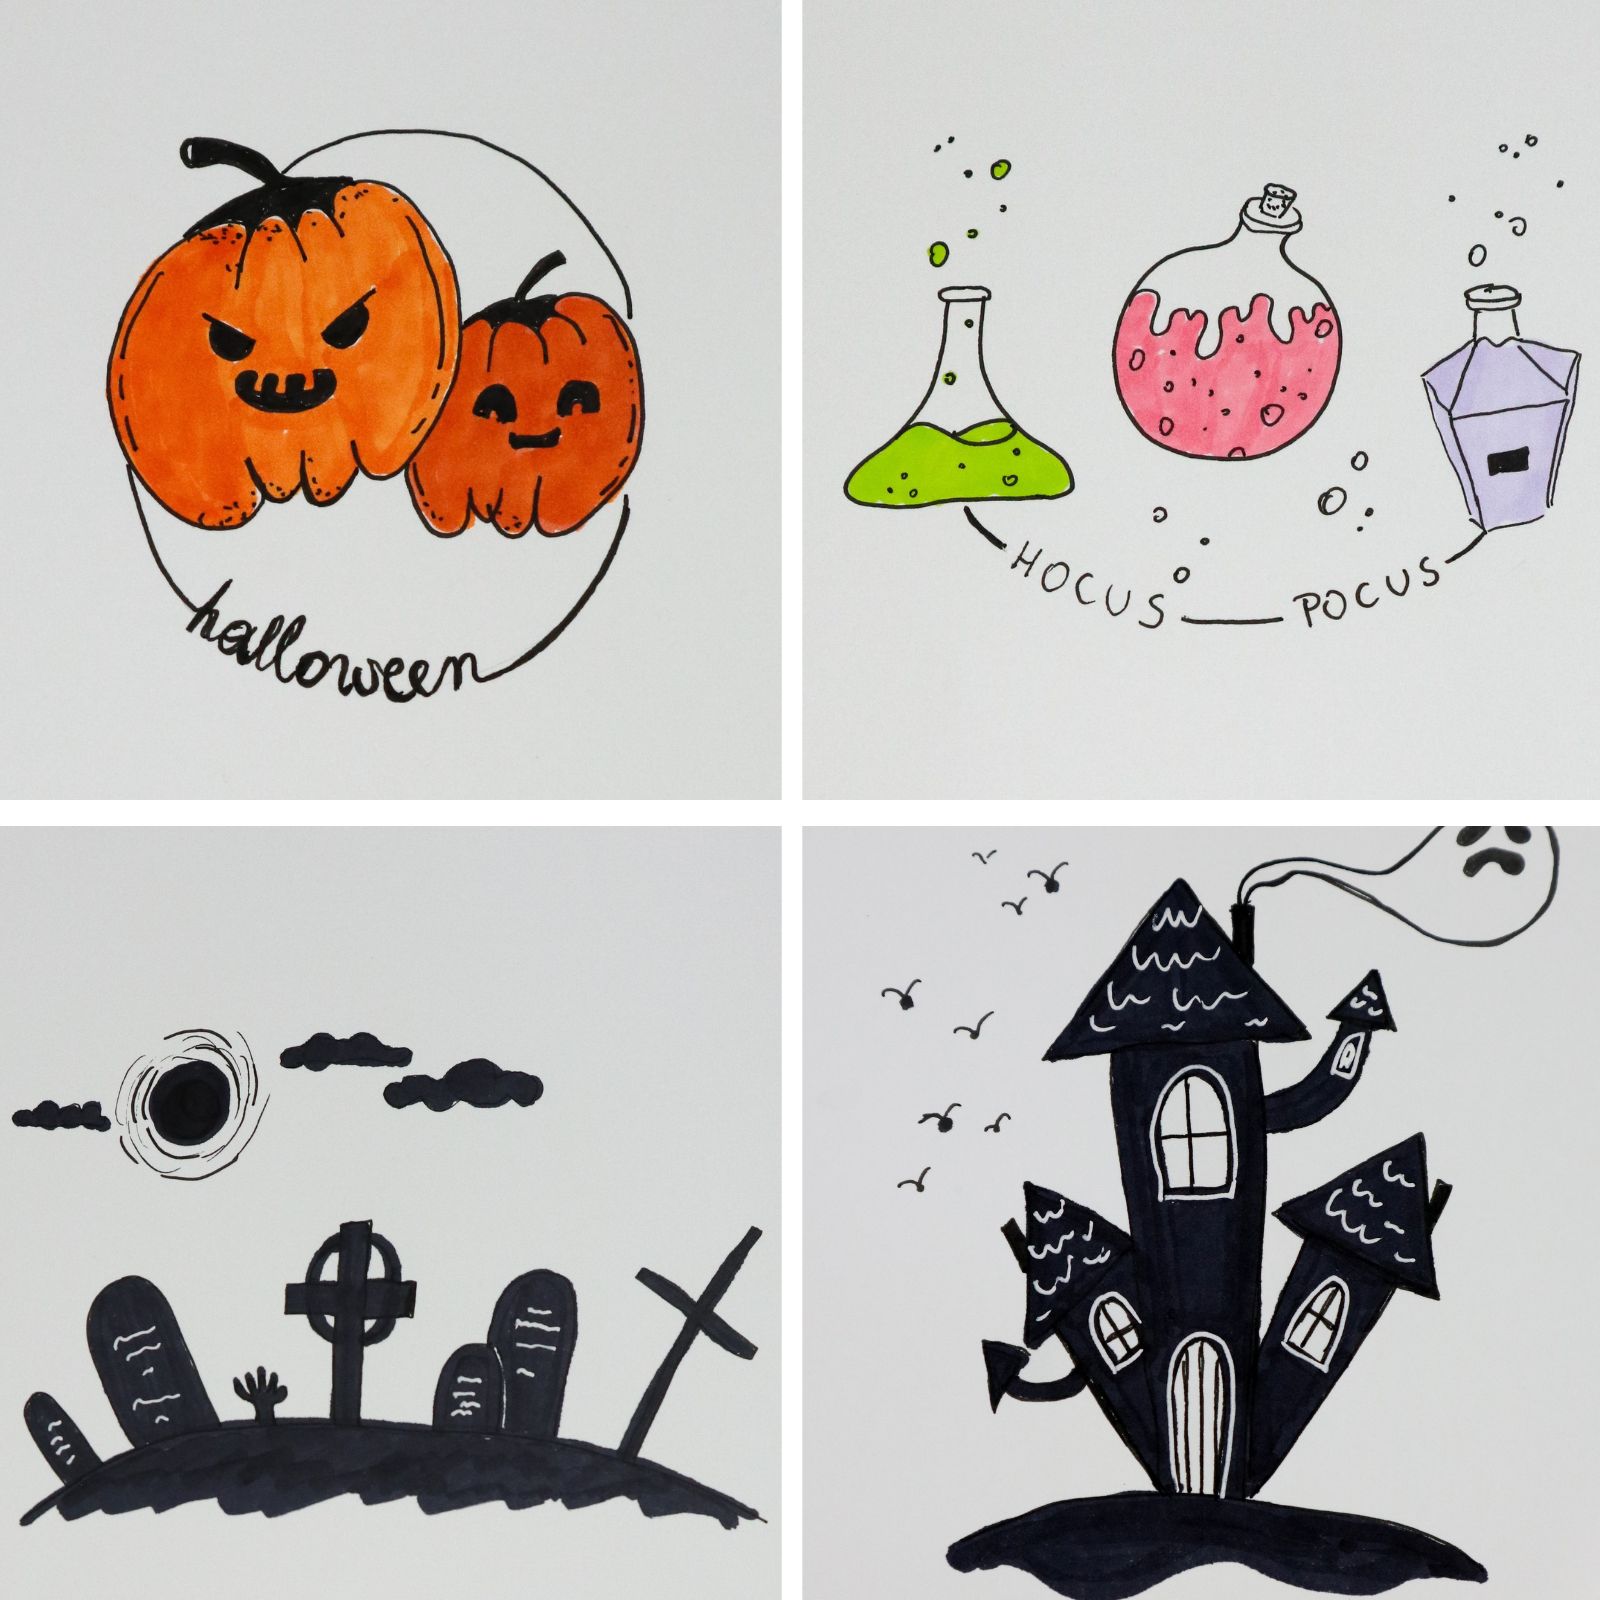 Kreative Oddities - Working on some ideas for some Halloween art. #Halloween  #creepy #scary #art #pumpkin #jackolantern #monster. | Facebook